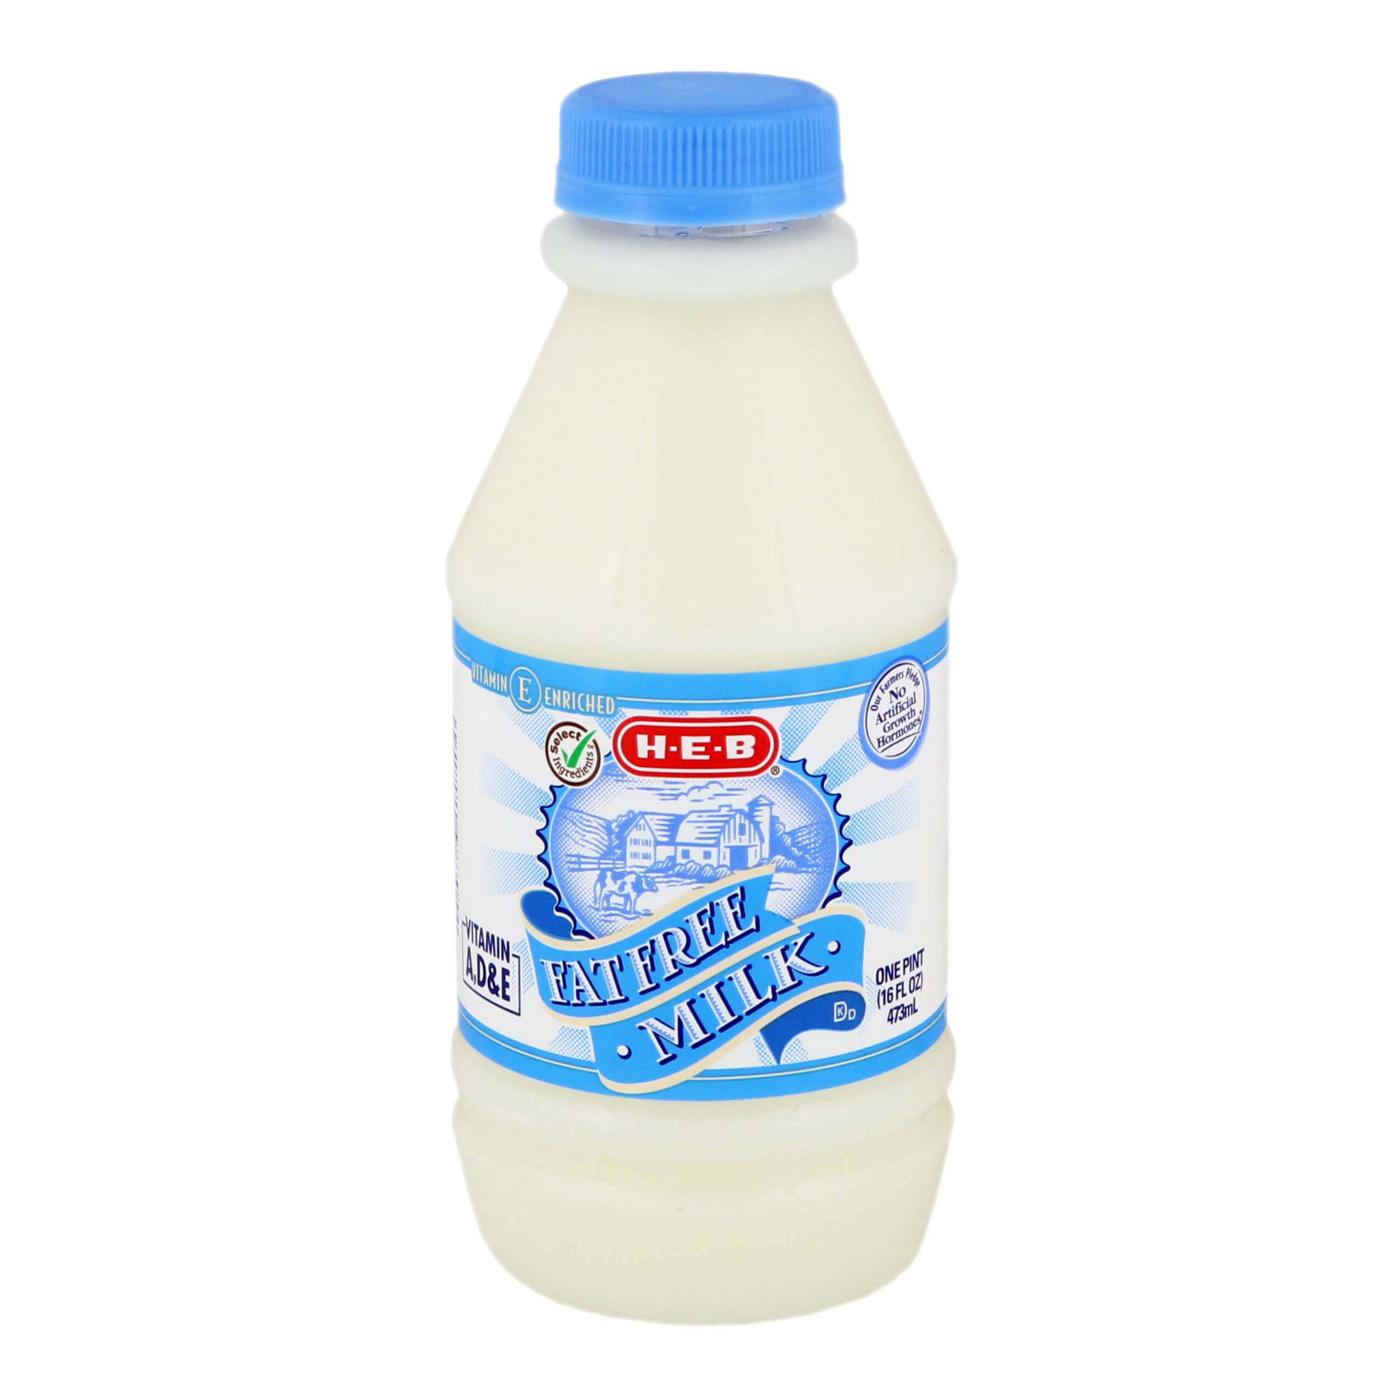 H-E-B Fat Free Milk; image 1 of 2